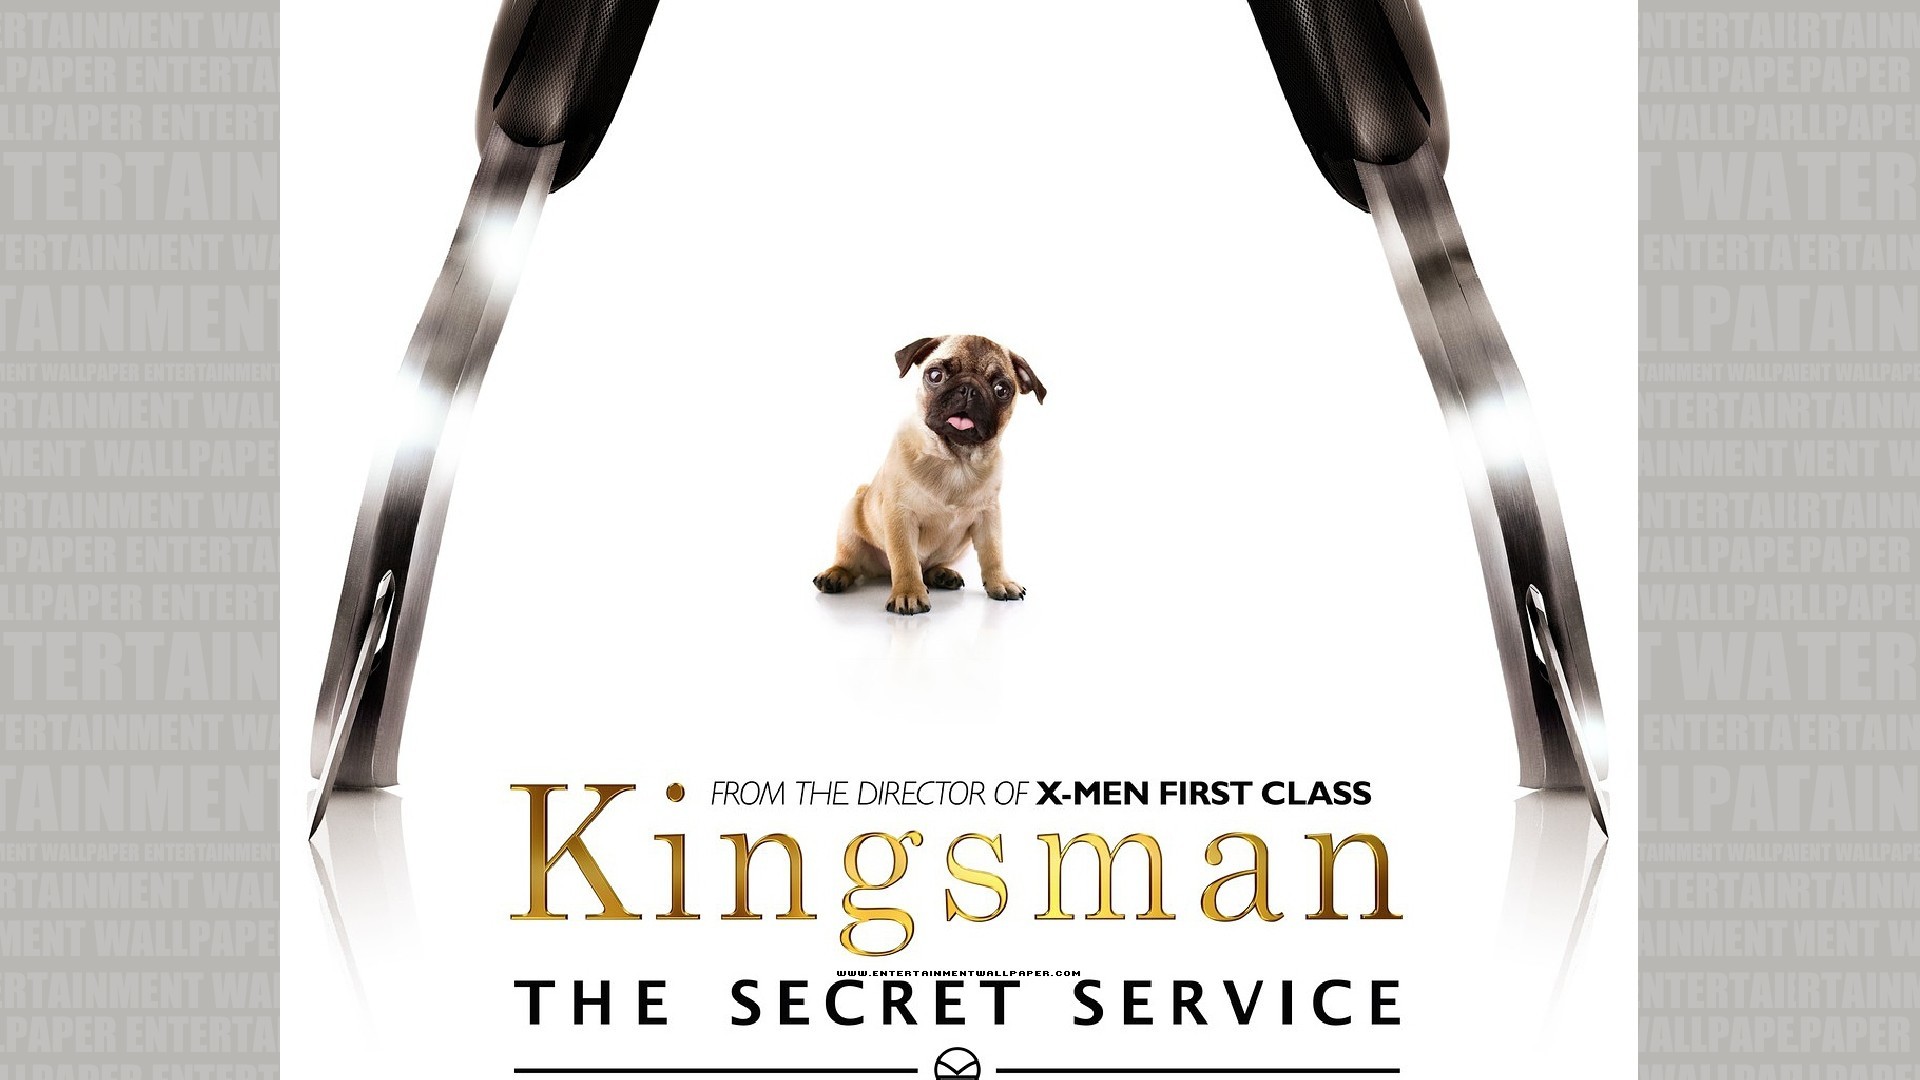 1920x1080 Kingsman: The Secret Service Wallpaper - Original size, download now.